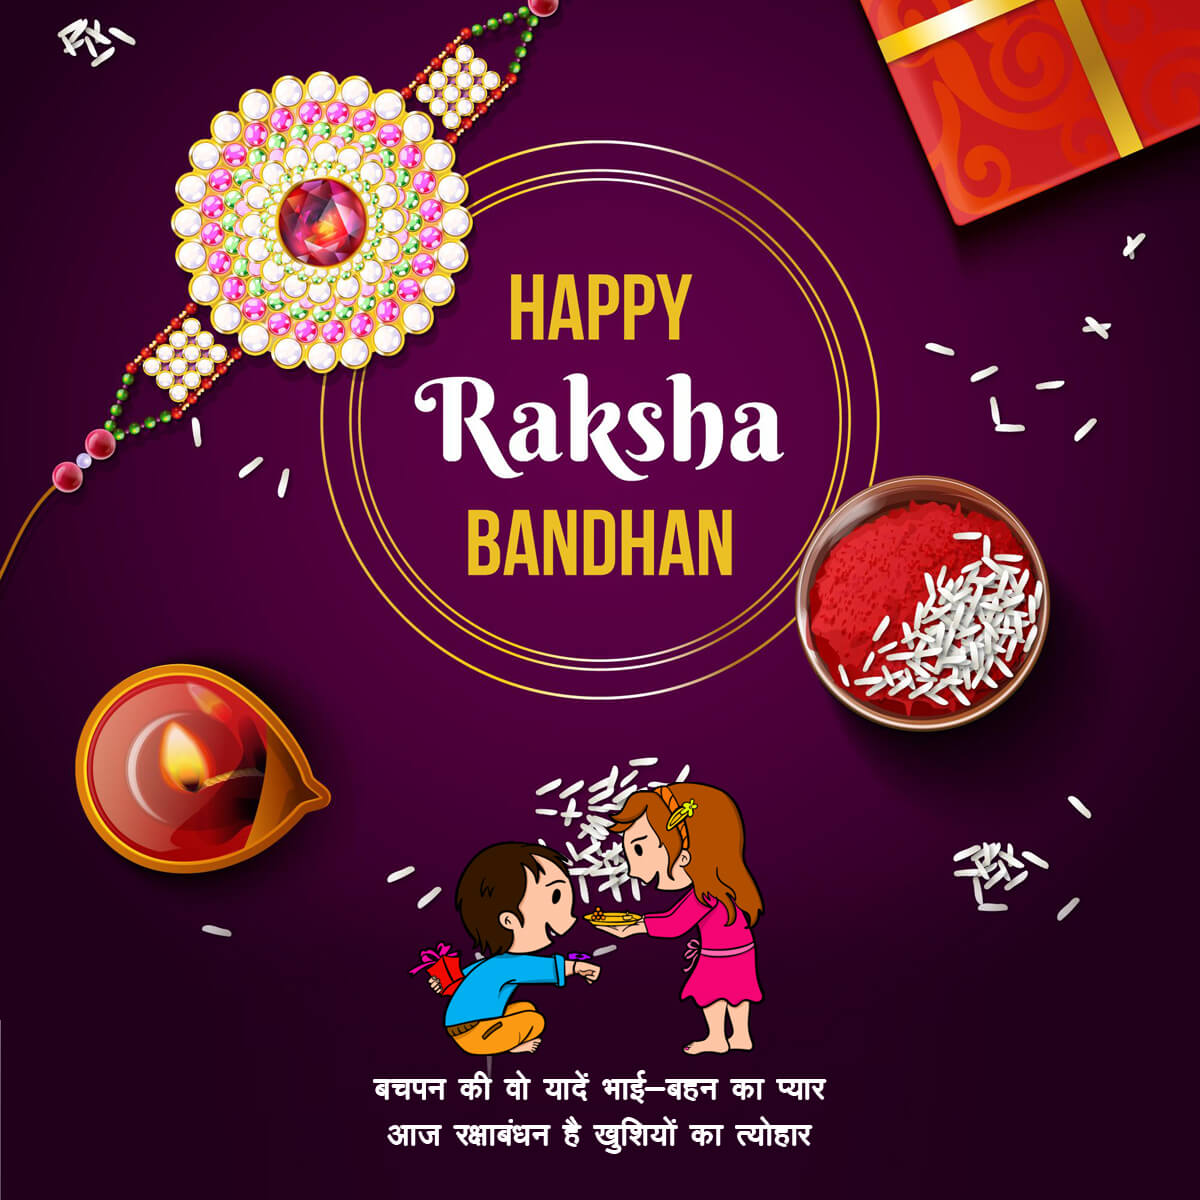 raksha bandhan hd images Images Download